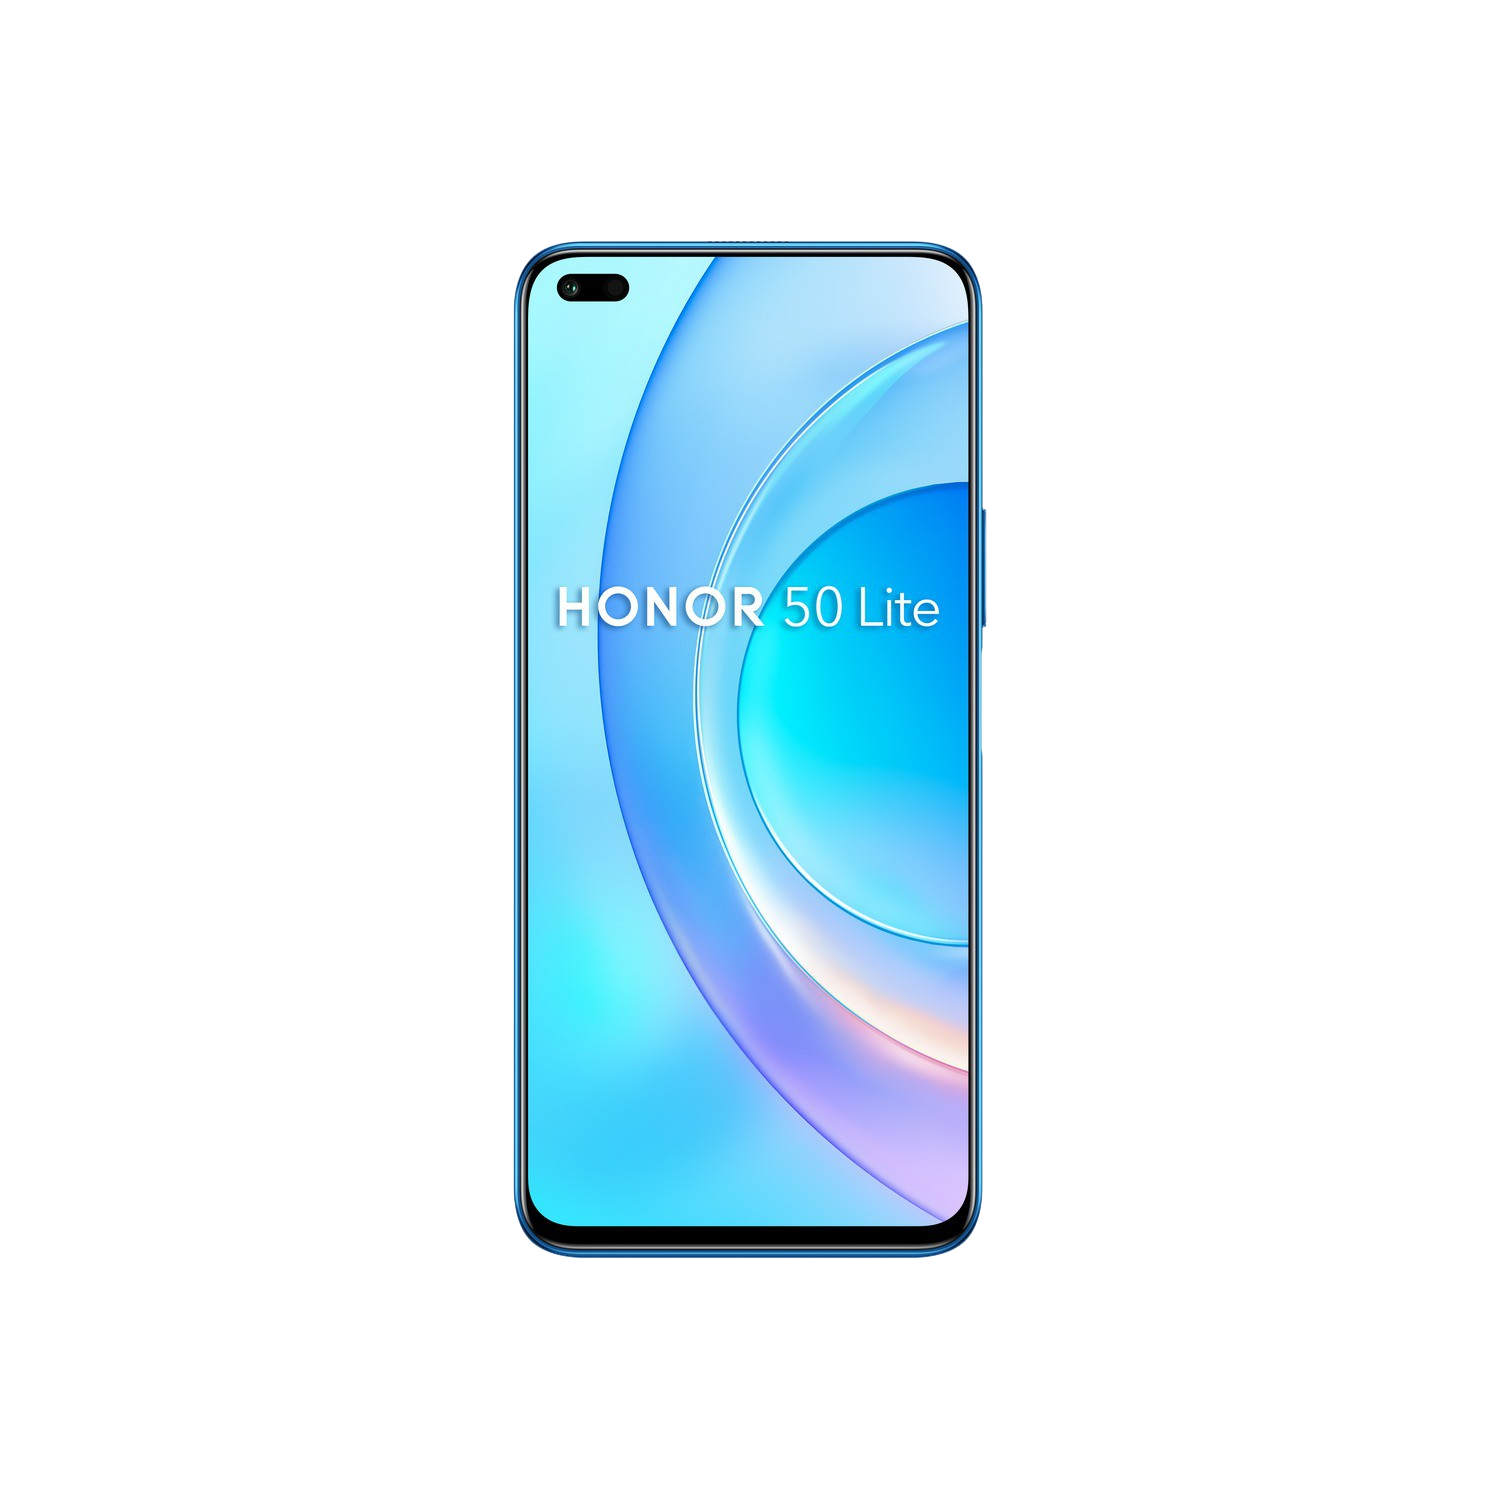 Honor 50 Lite azul 6128gb 4 traseras snapdragon 662 smartphone libre 6 128 con pantalla fullview 667 pulgadas android 64 mp supercharge 66 w dual sim y nfc gms es ram 6.67 sdm662 4300 6gb 128gb 6.67oc2.06gb128gb